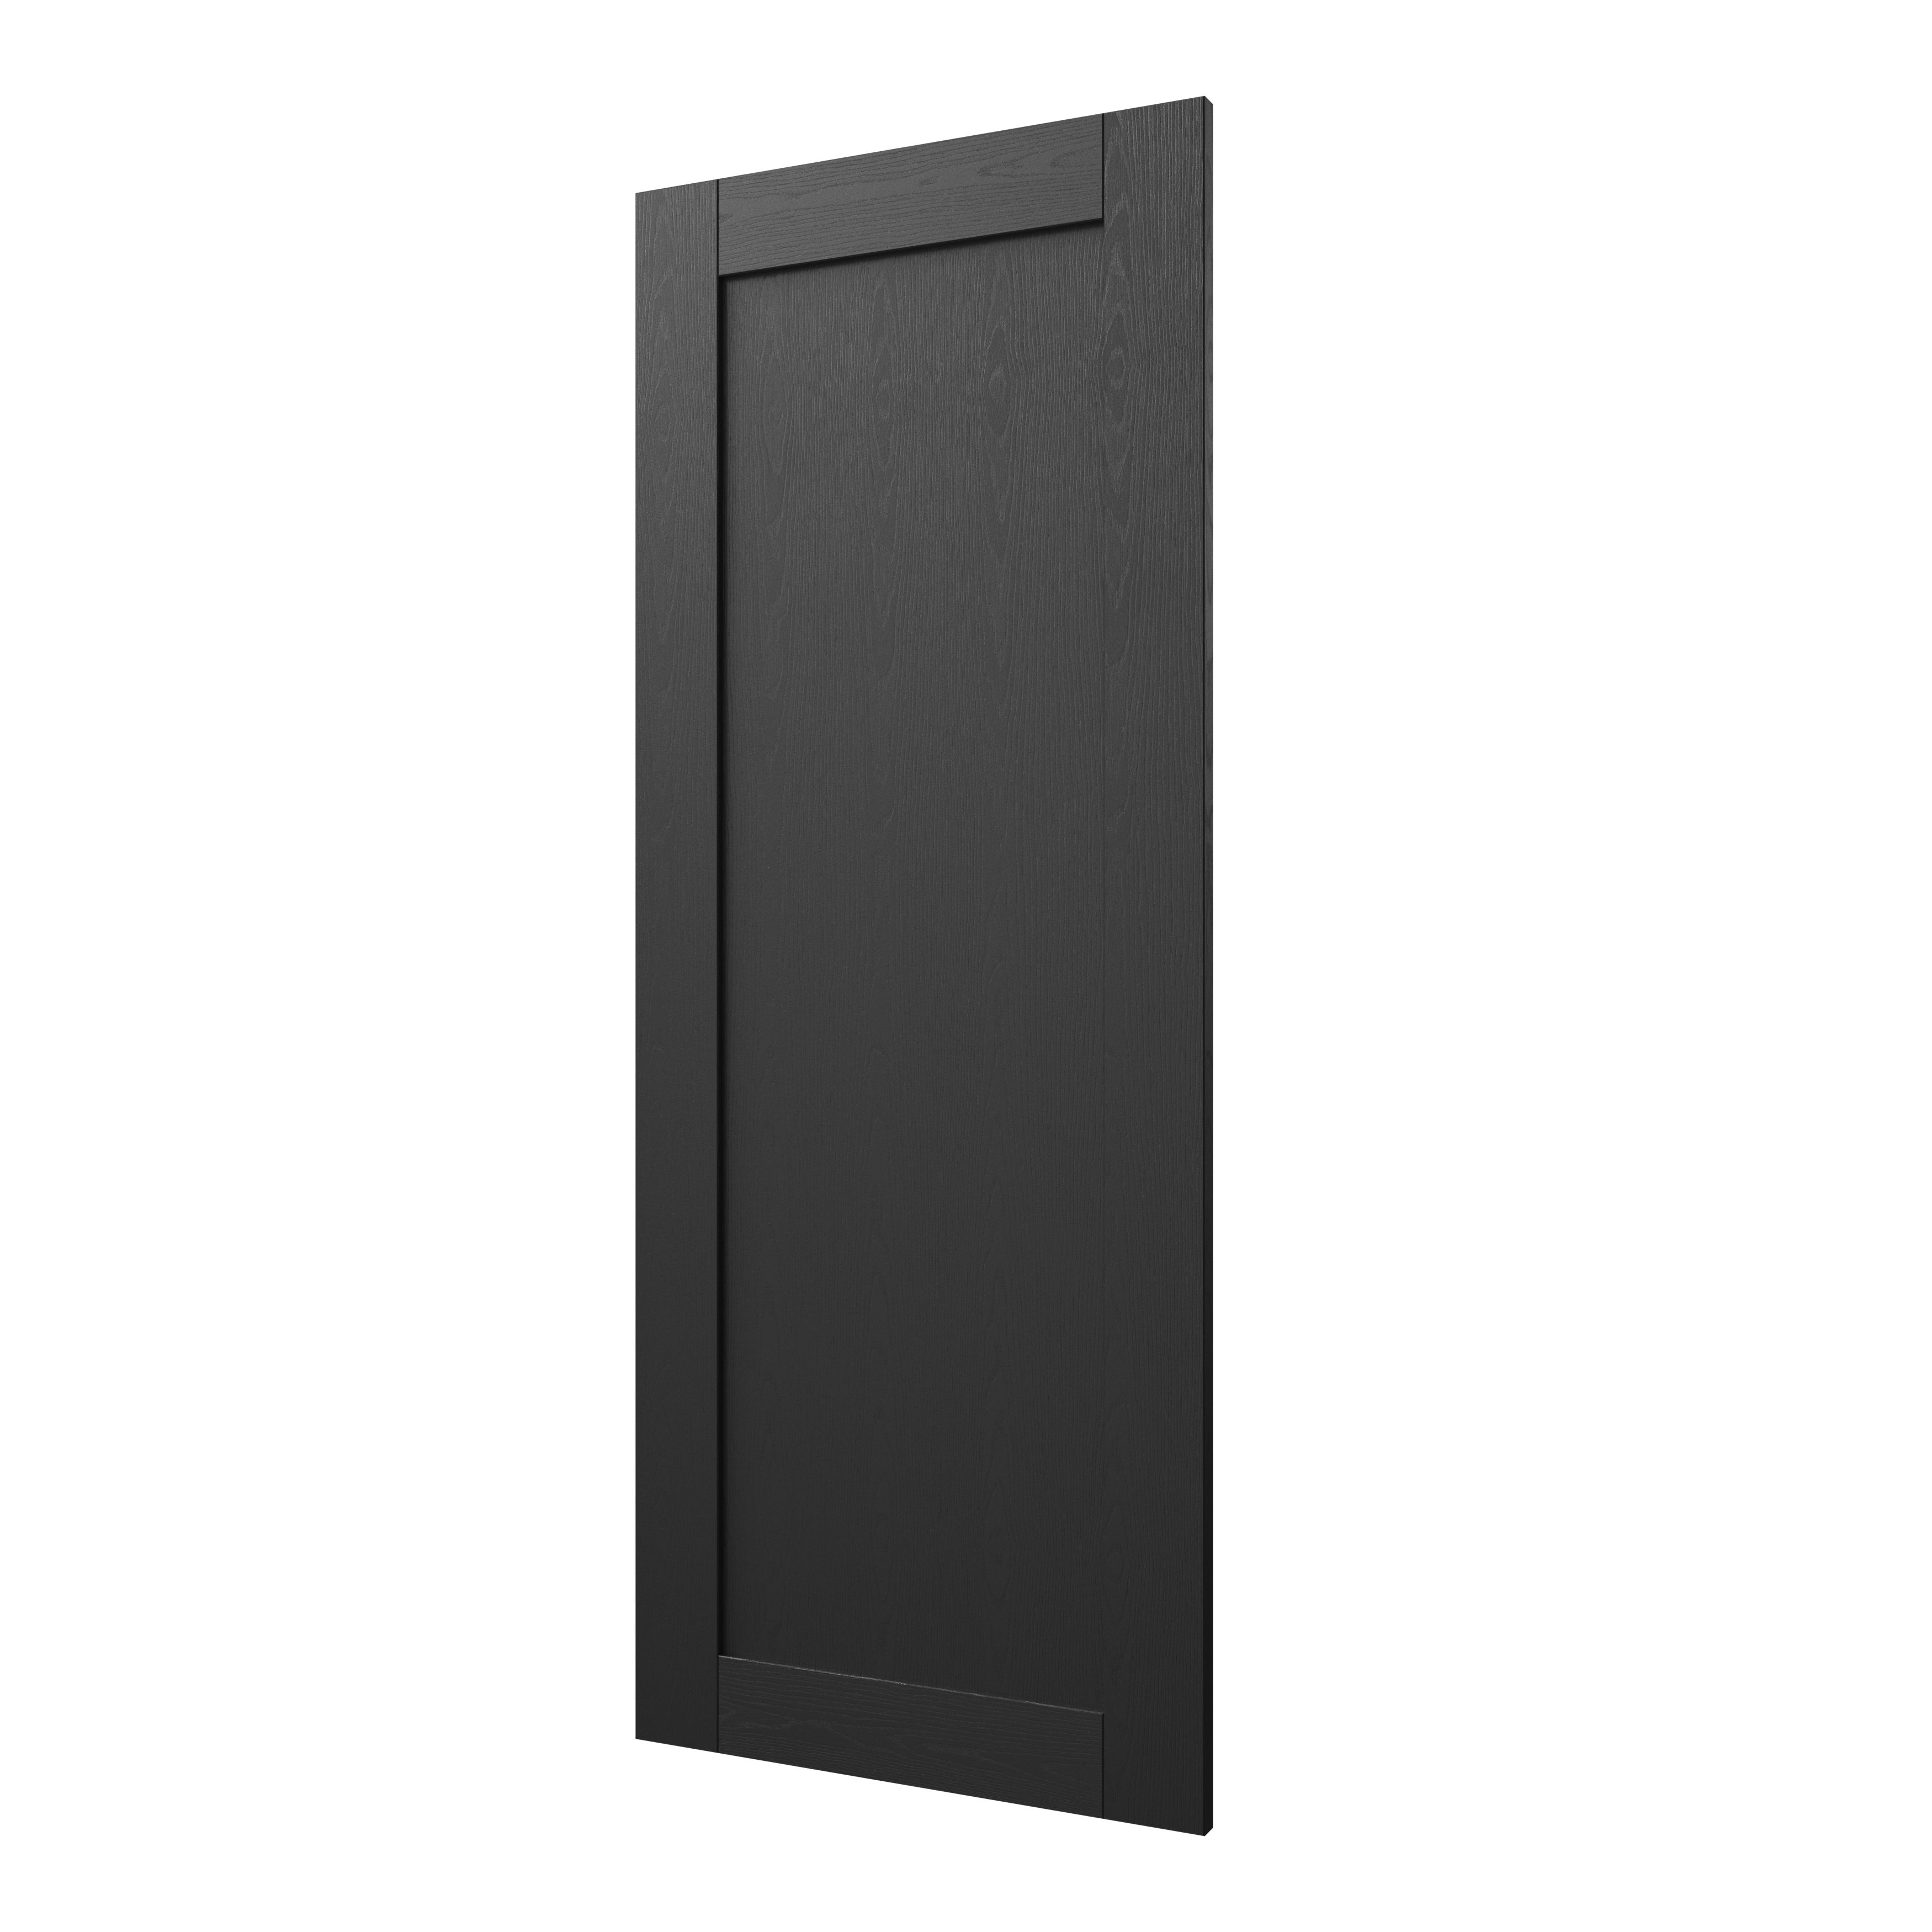 GoodHome Verbena Matt charcoal shaker 70:30 Larder Cabinet door (W)500mm (H)1287mm (T)20mm